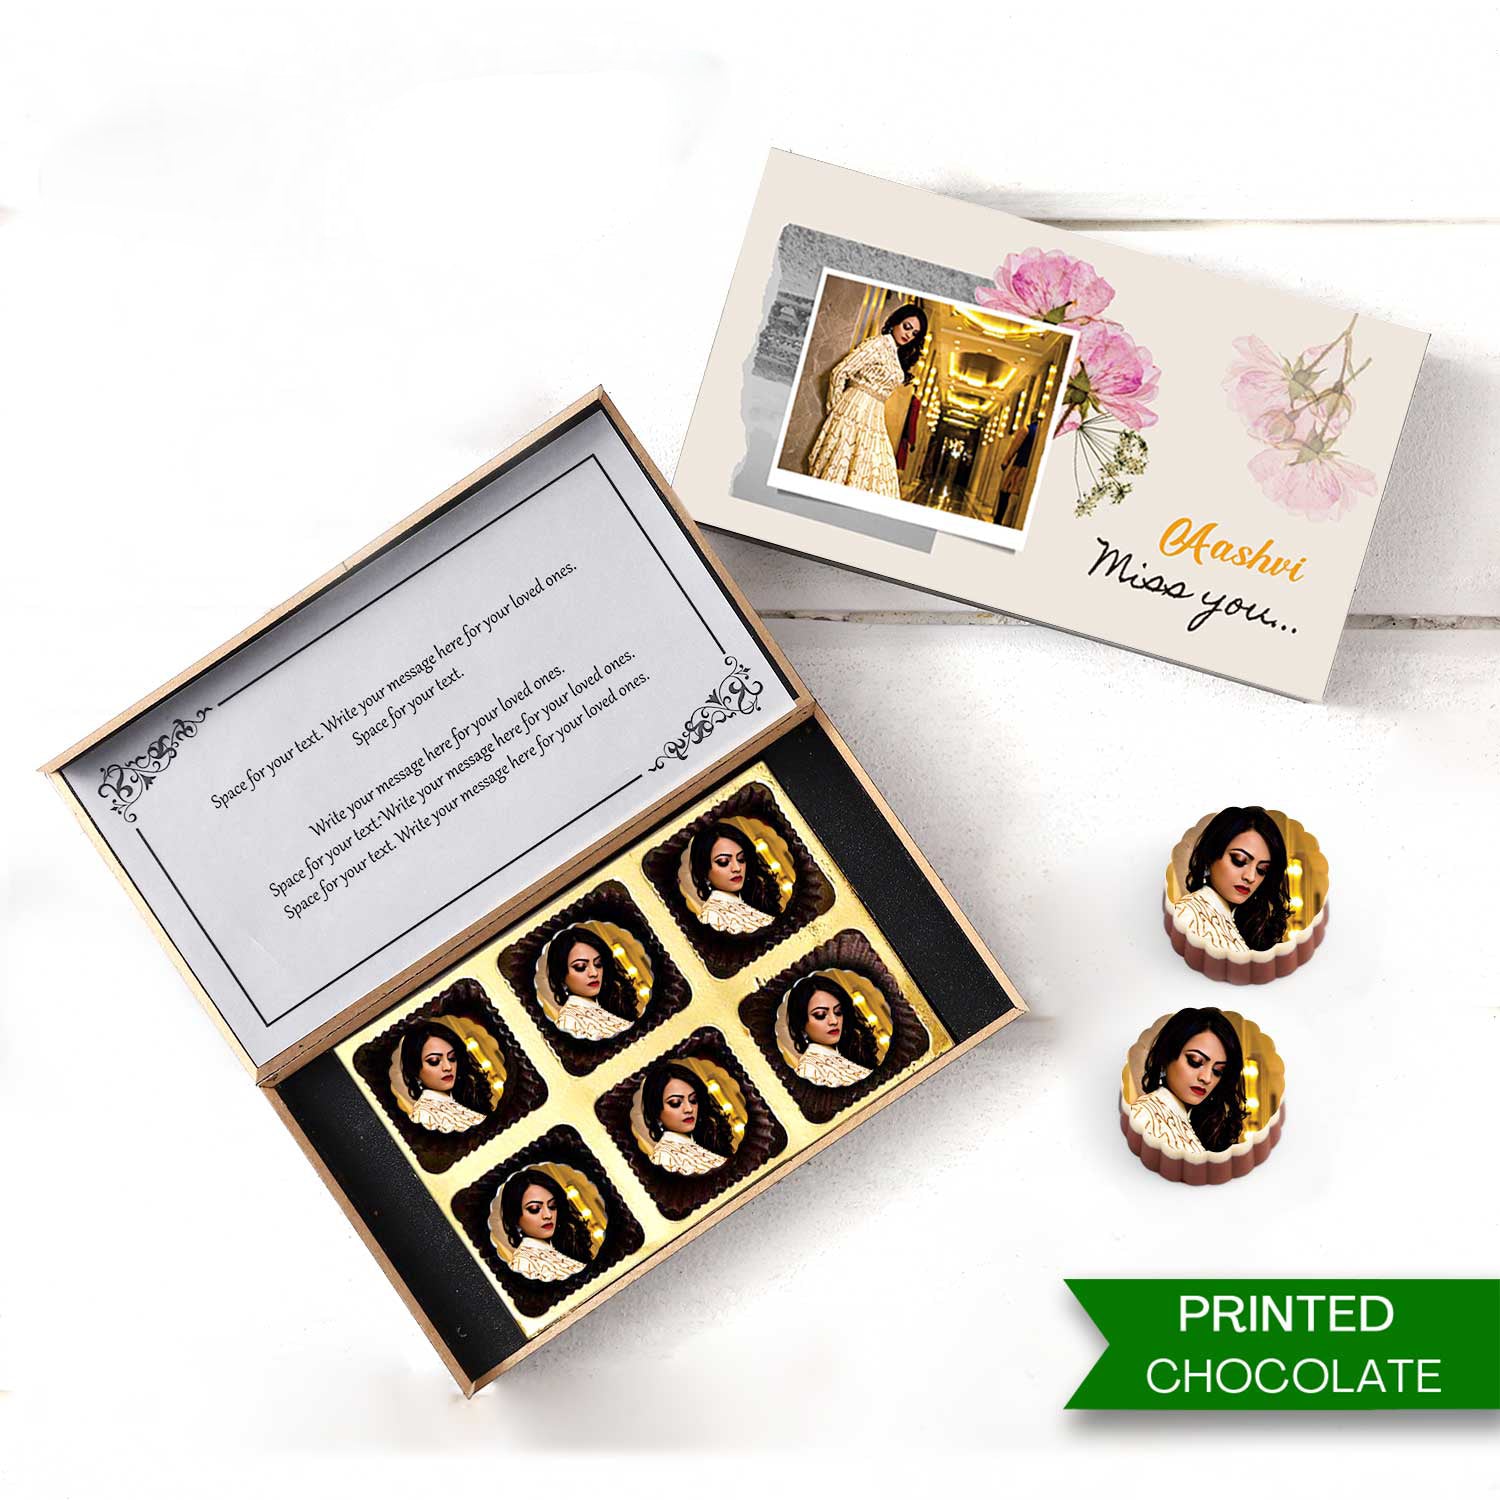 Miss You Printed Chocolate Gifts - Choco ManualART